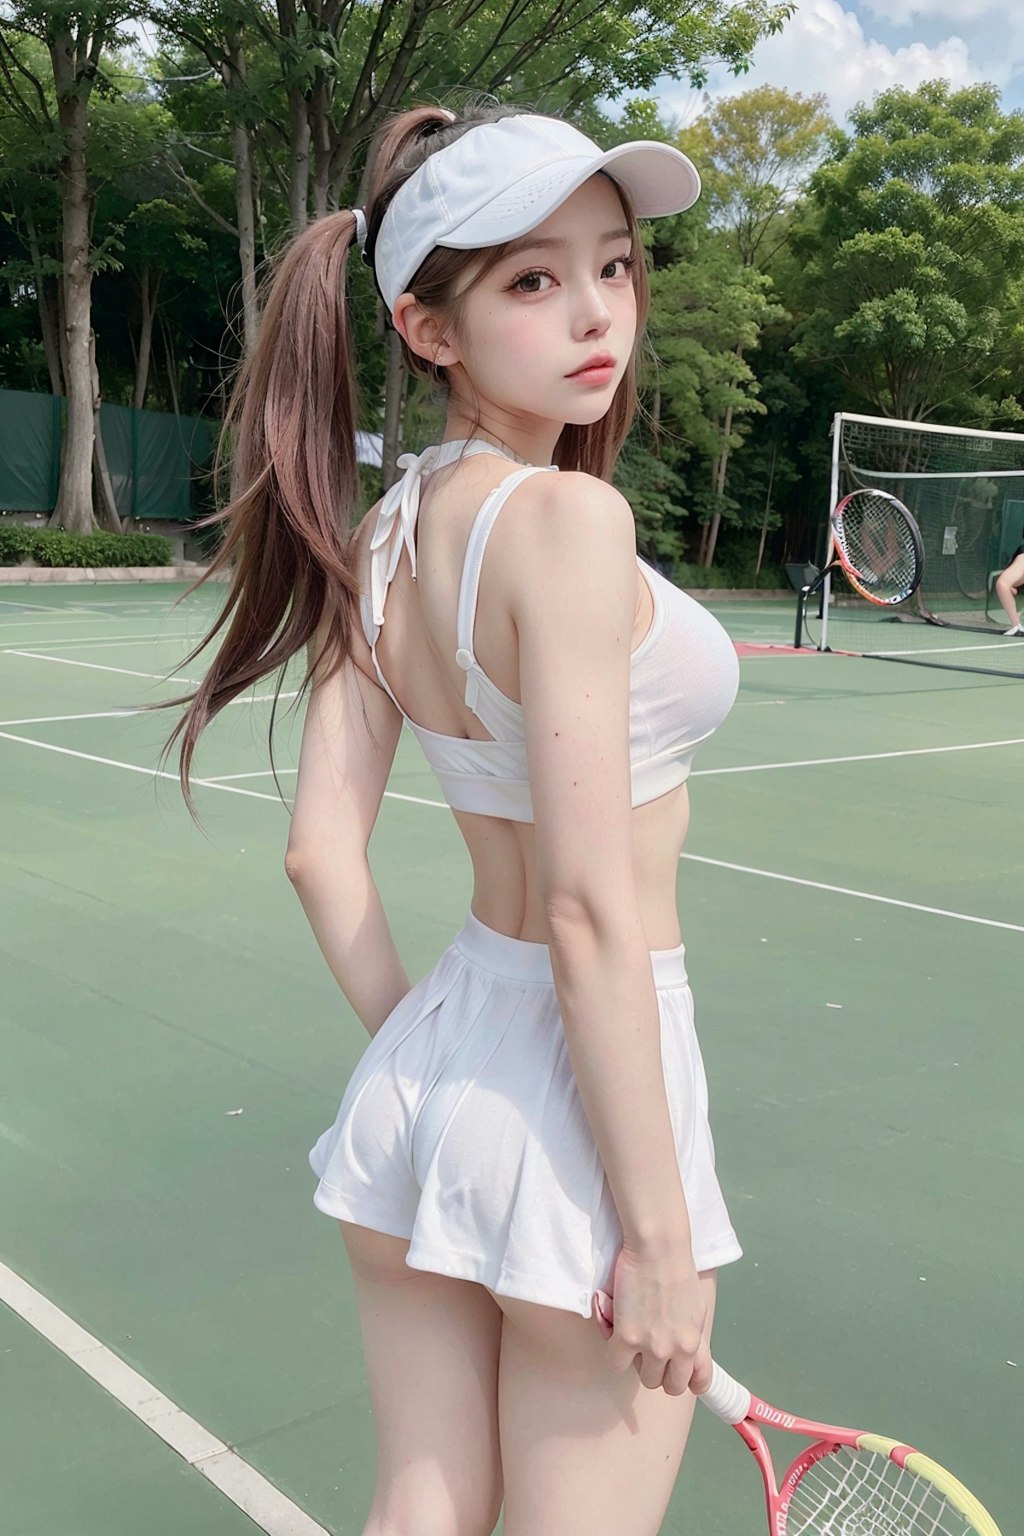 Tennis girl!!